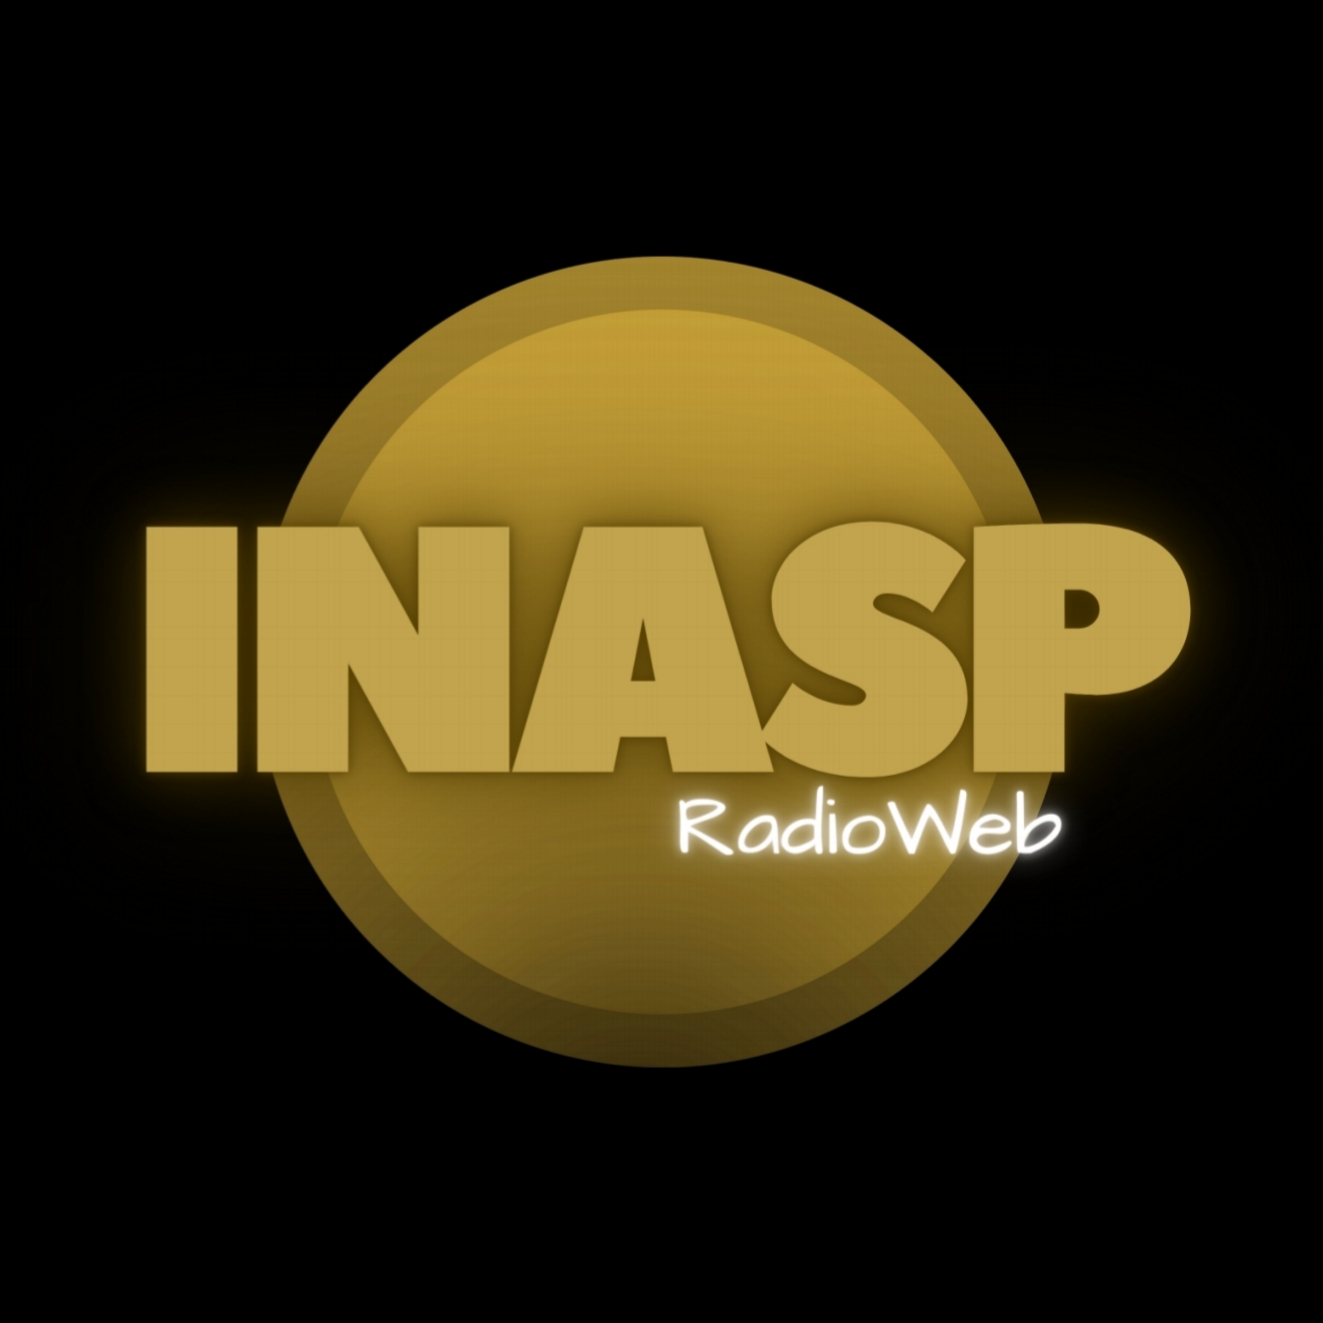 INASP - RADIOWEB